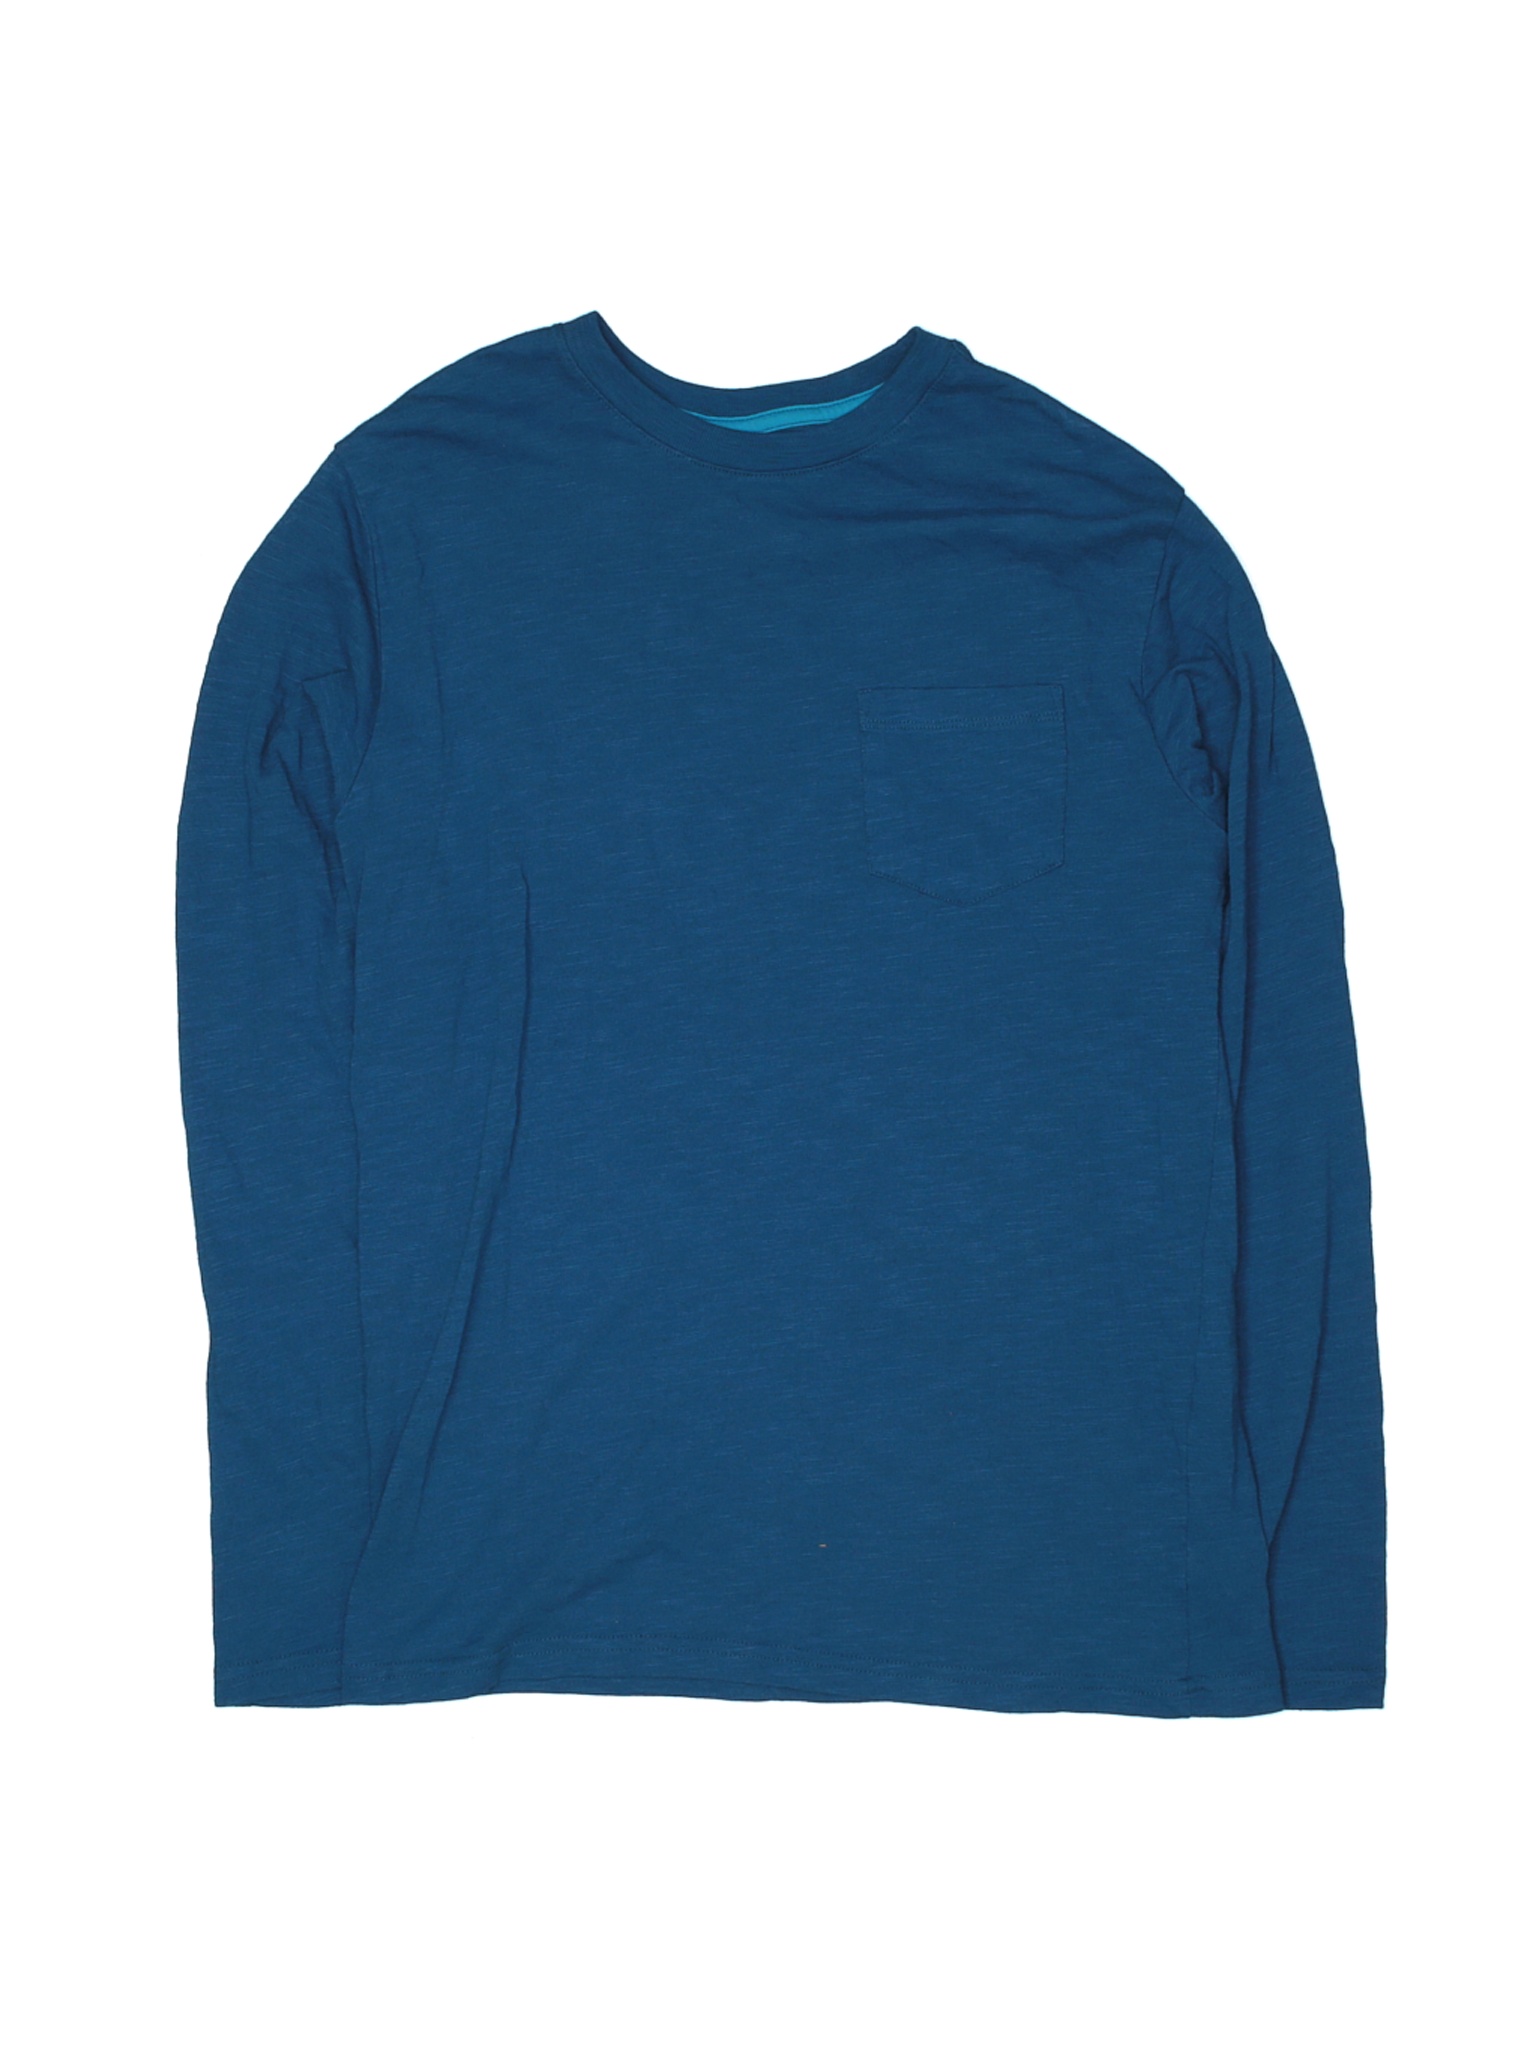 Wonder Nation Boys Blue Long Sleeve T-Shirt 18 | eBay